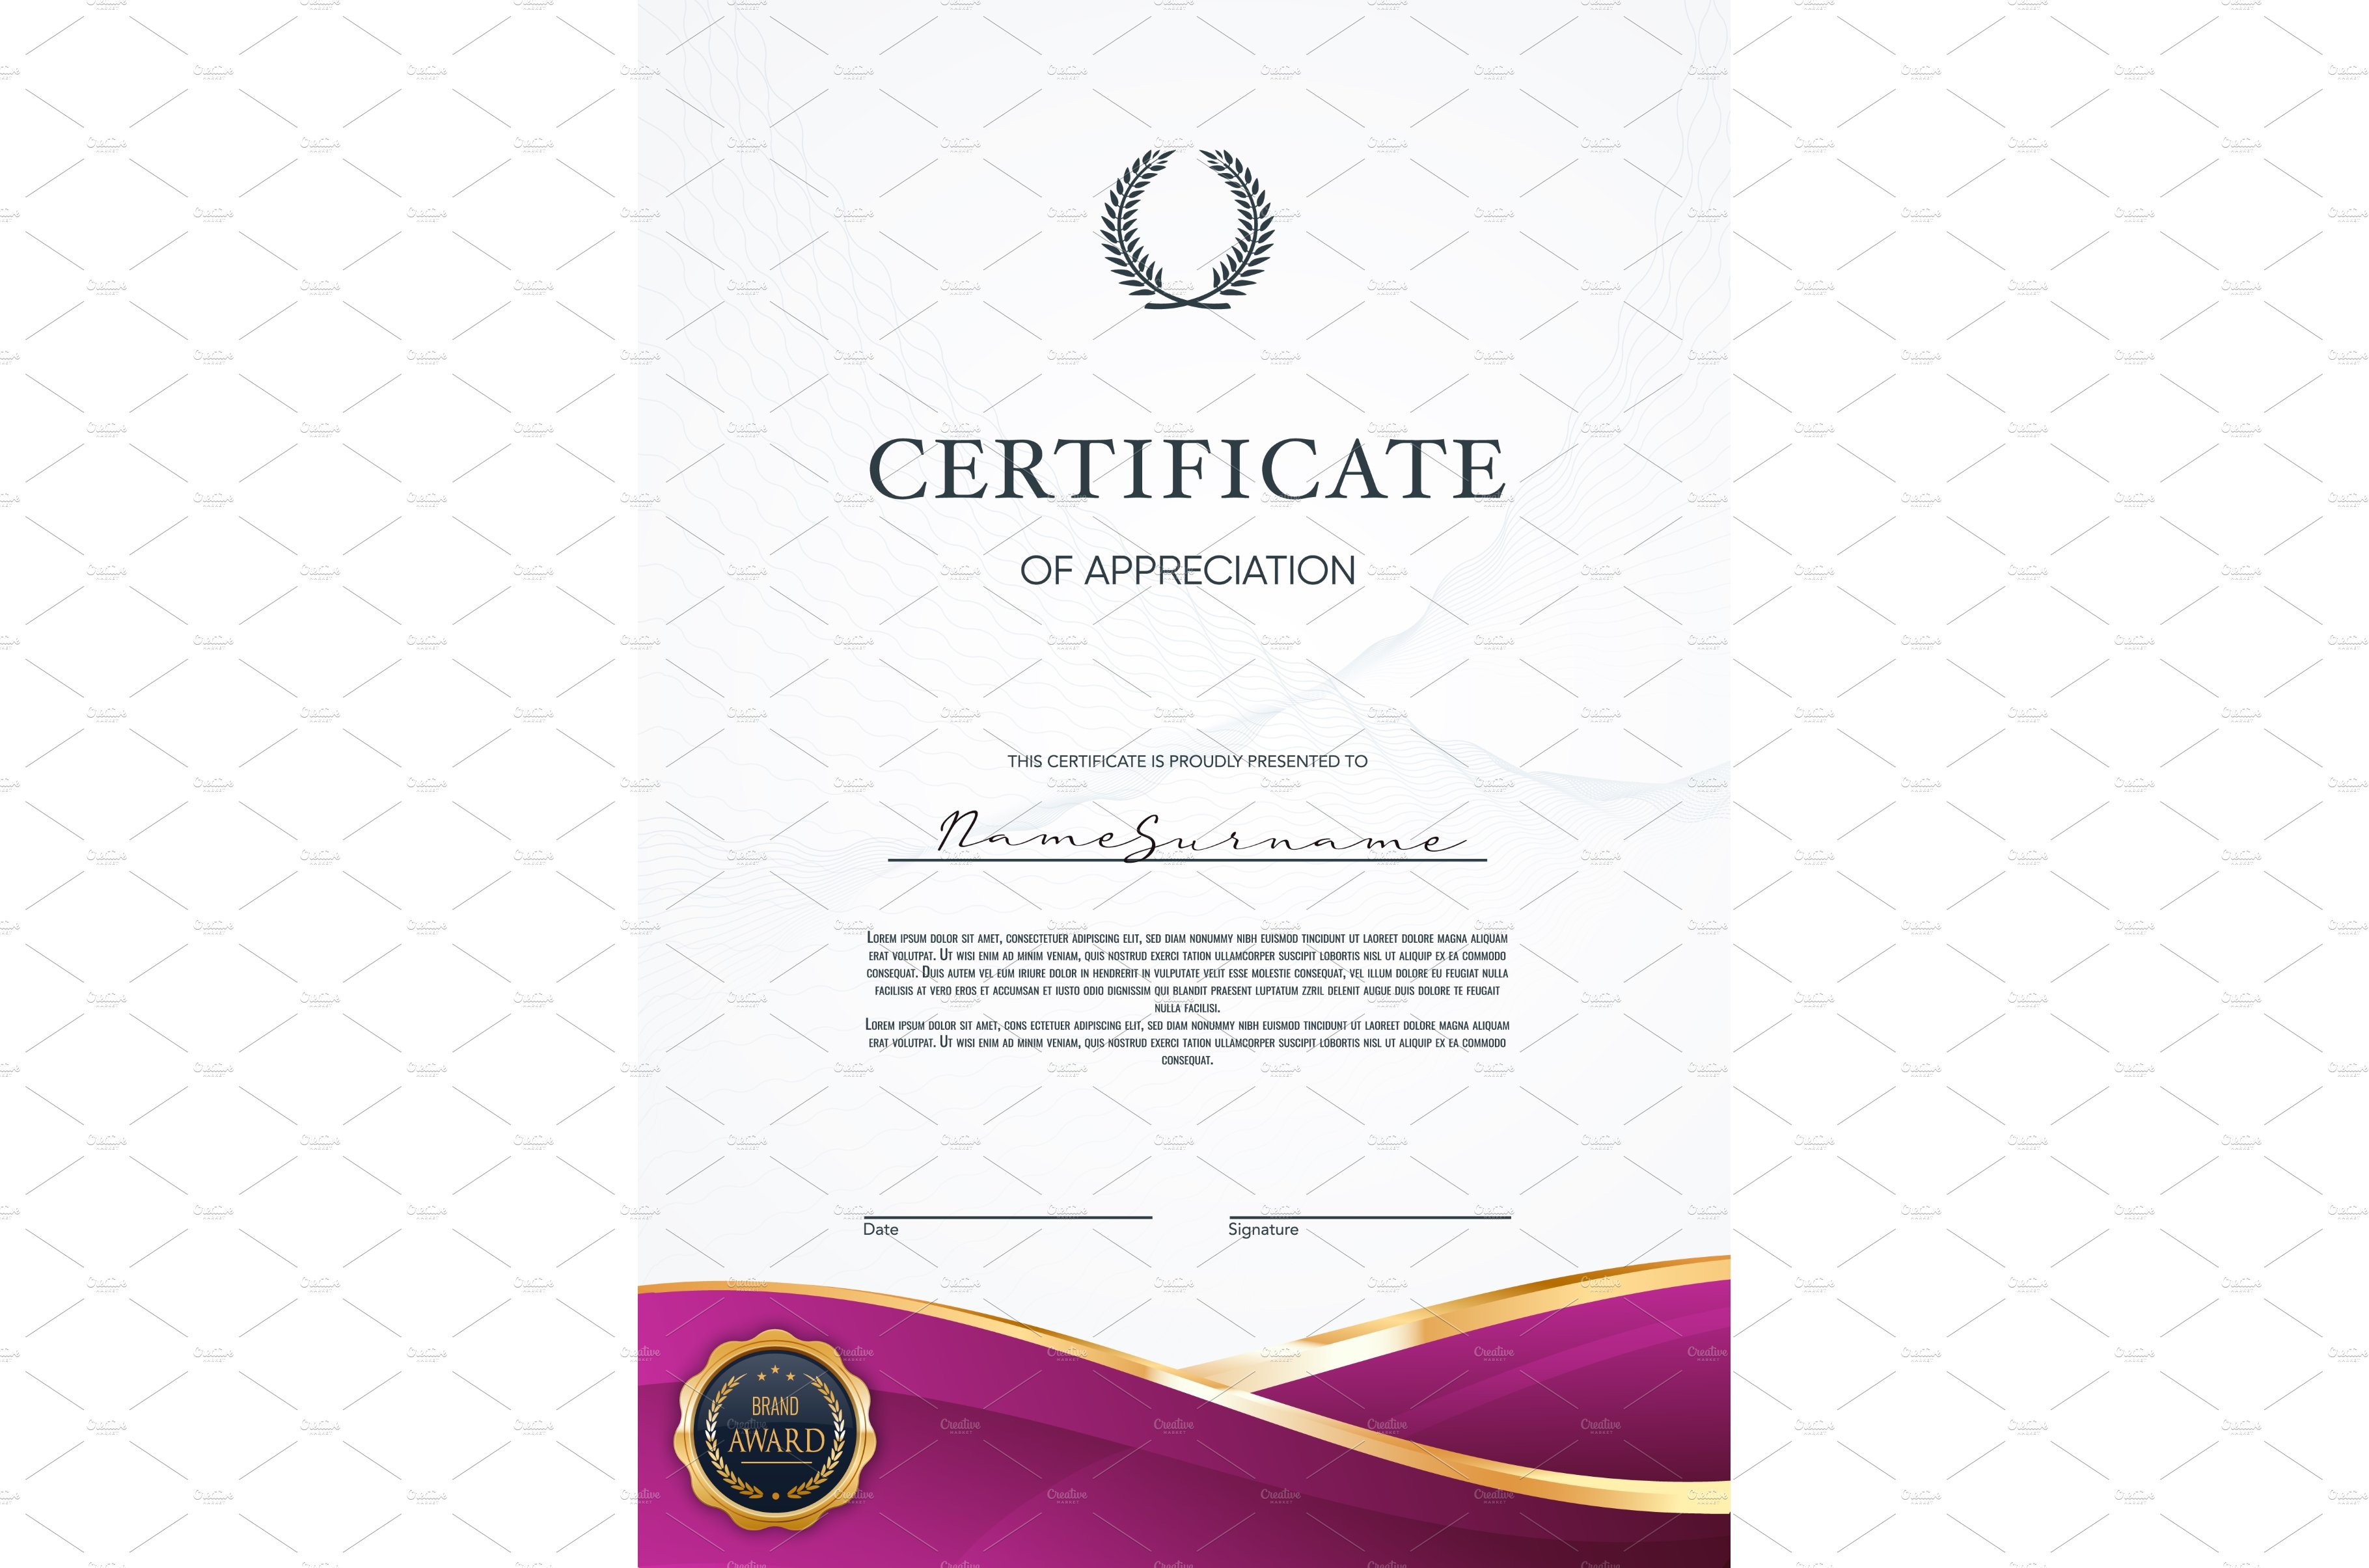 Award certificate, appreciation cover image.